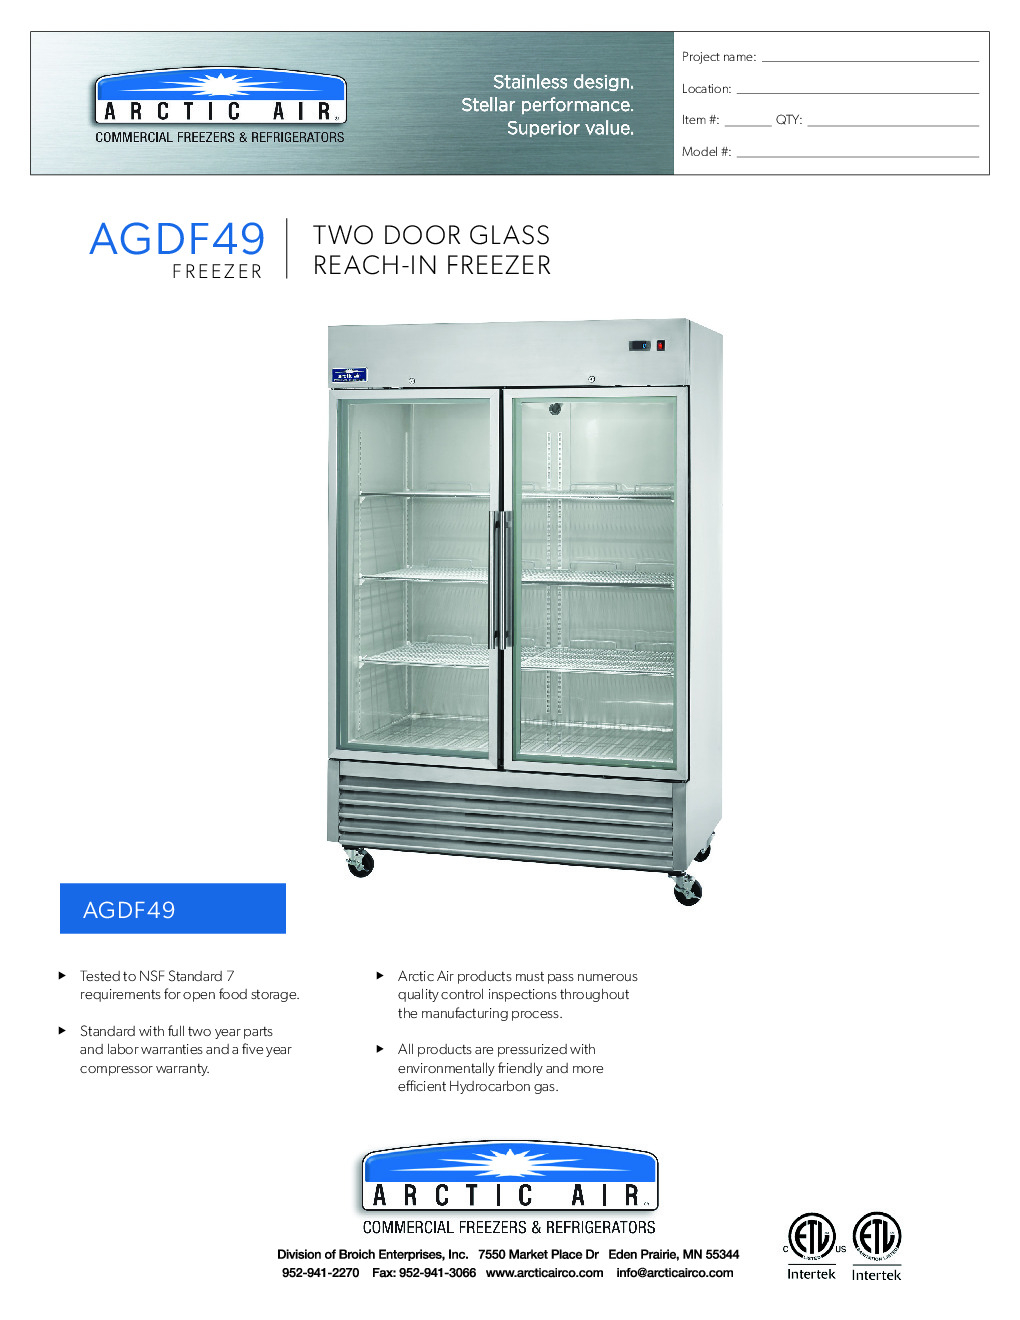 Arctic Air AGDF49 Reach-In Freezer